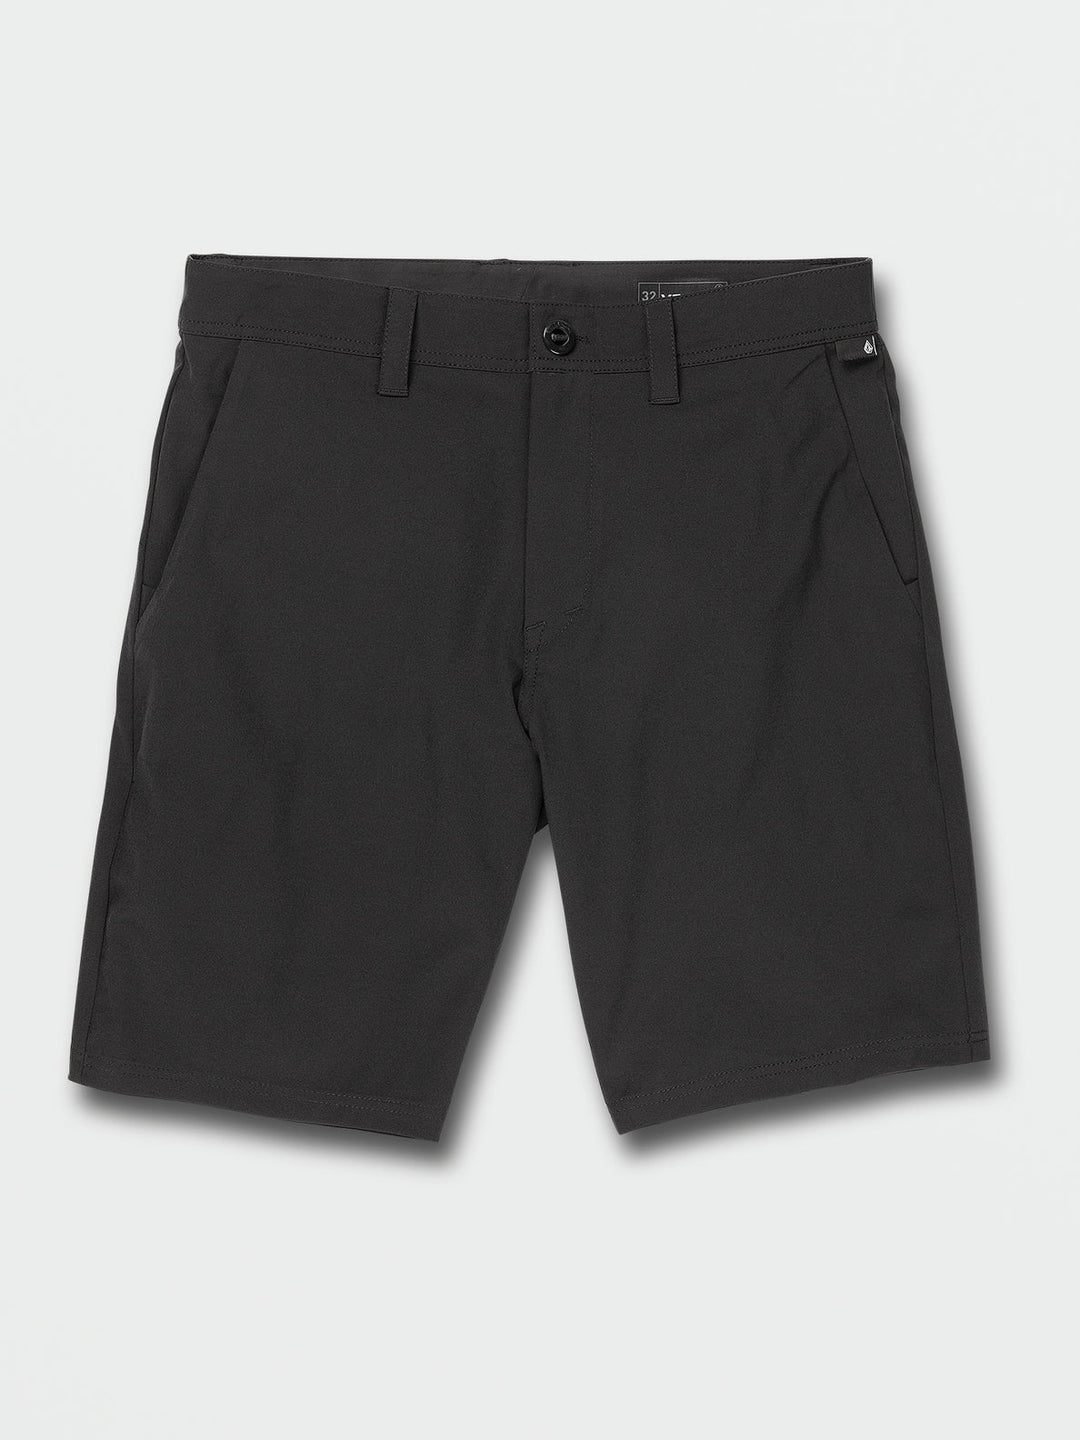 Volcom Frickin Cross Shred Shorts - Black - Sun Diego Boardshop